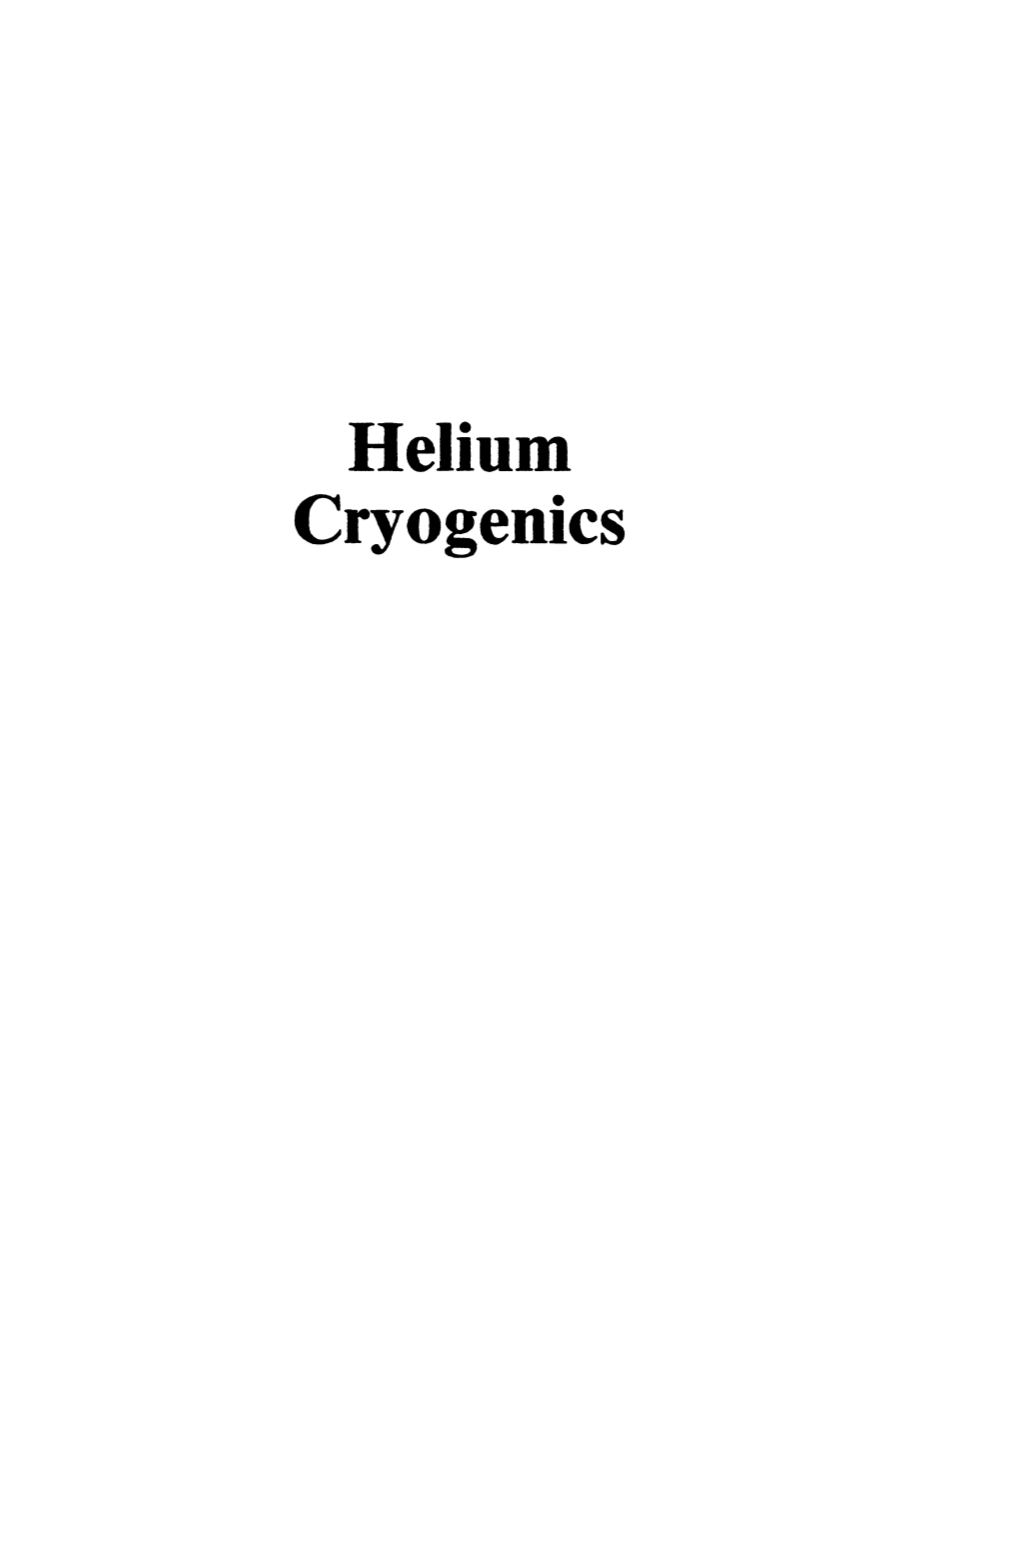 Helium Cryogenics the INTERNATIONAL CRYOGENICS MONOGRAPH SERIES